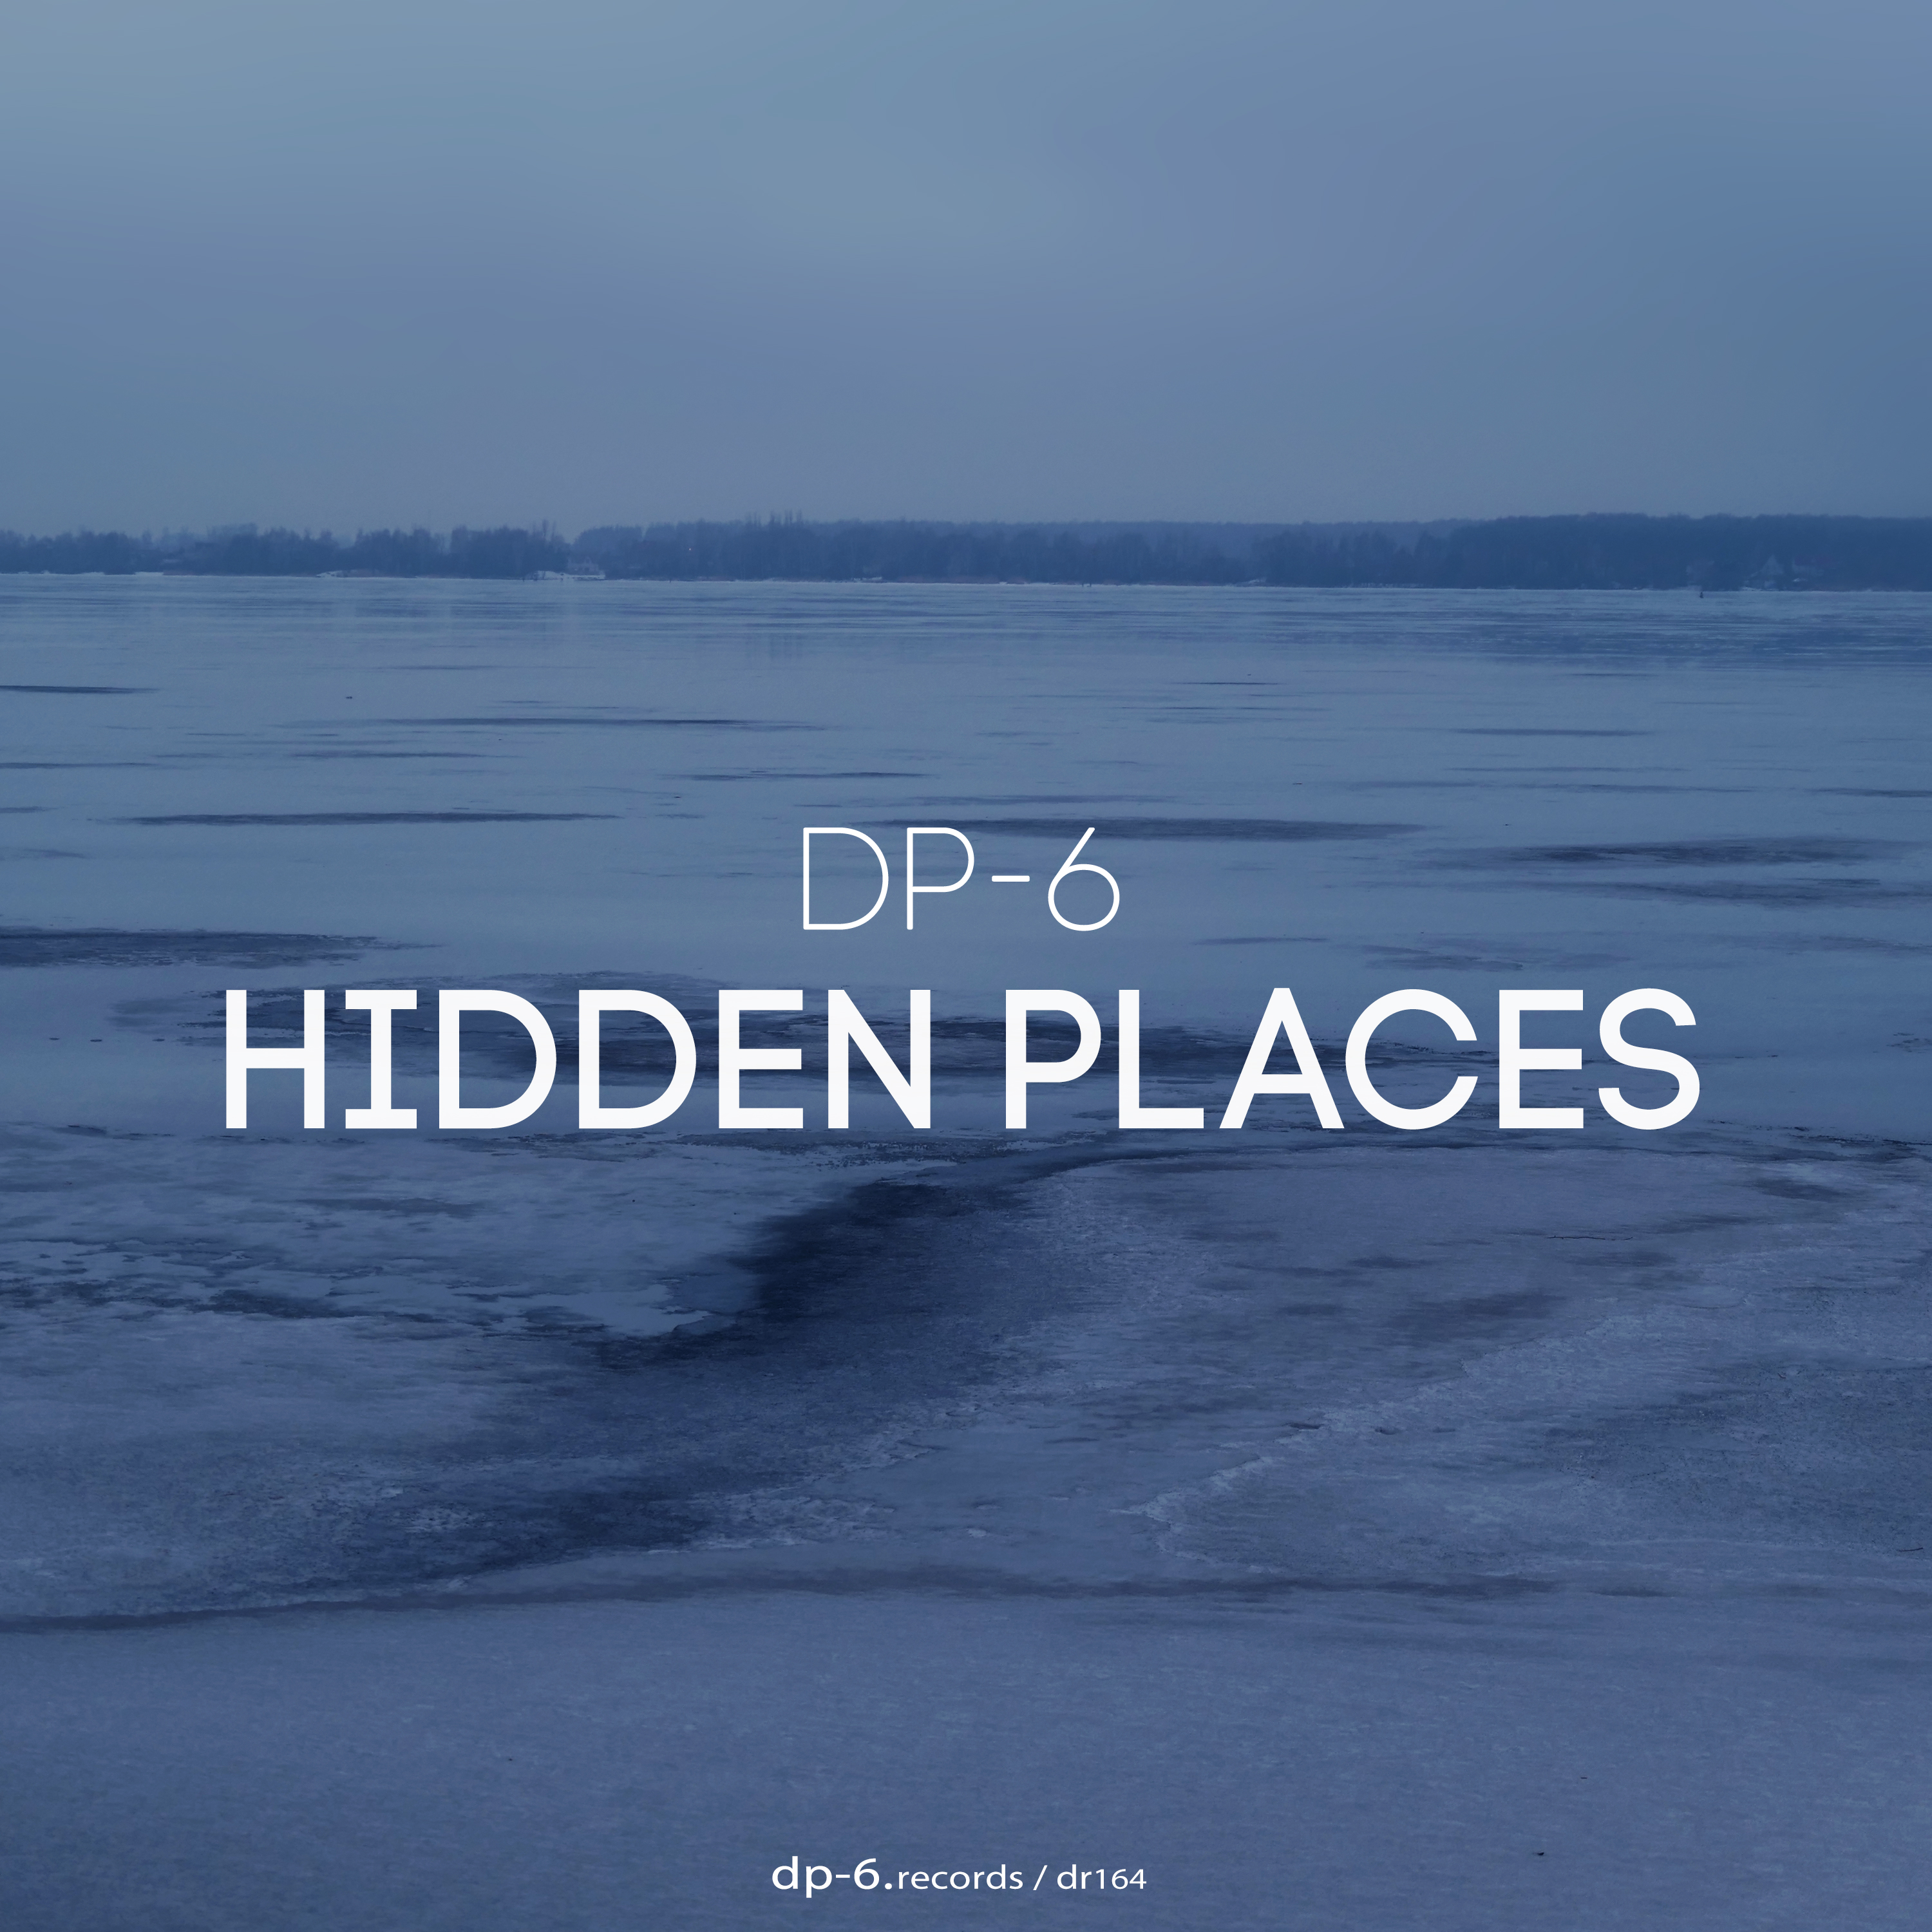 DP-6 Hidden Places